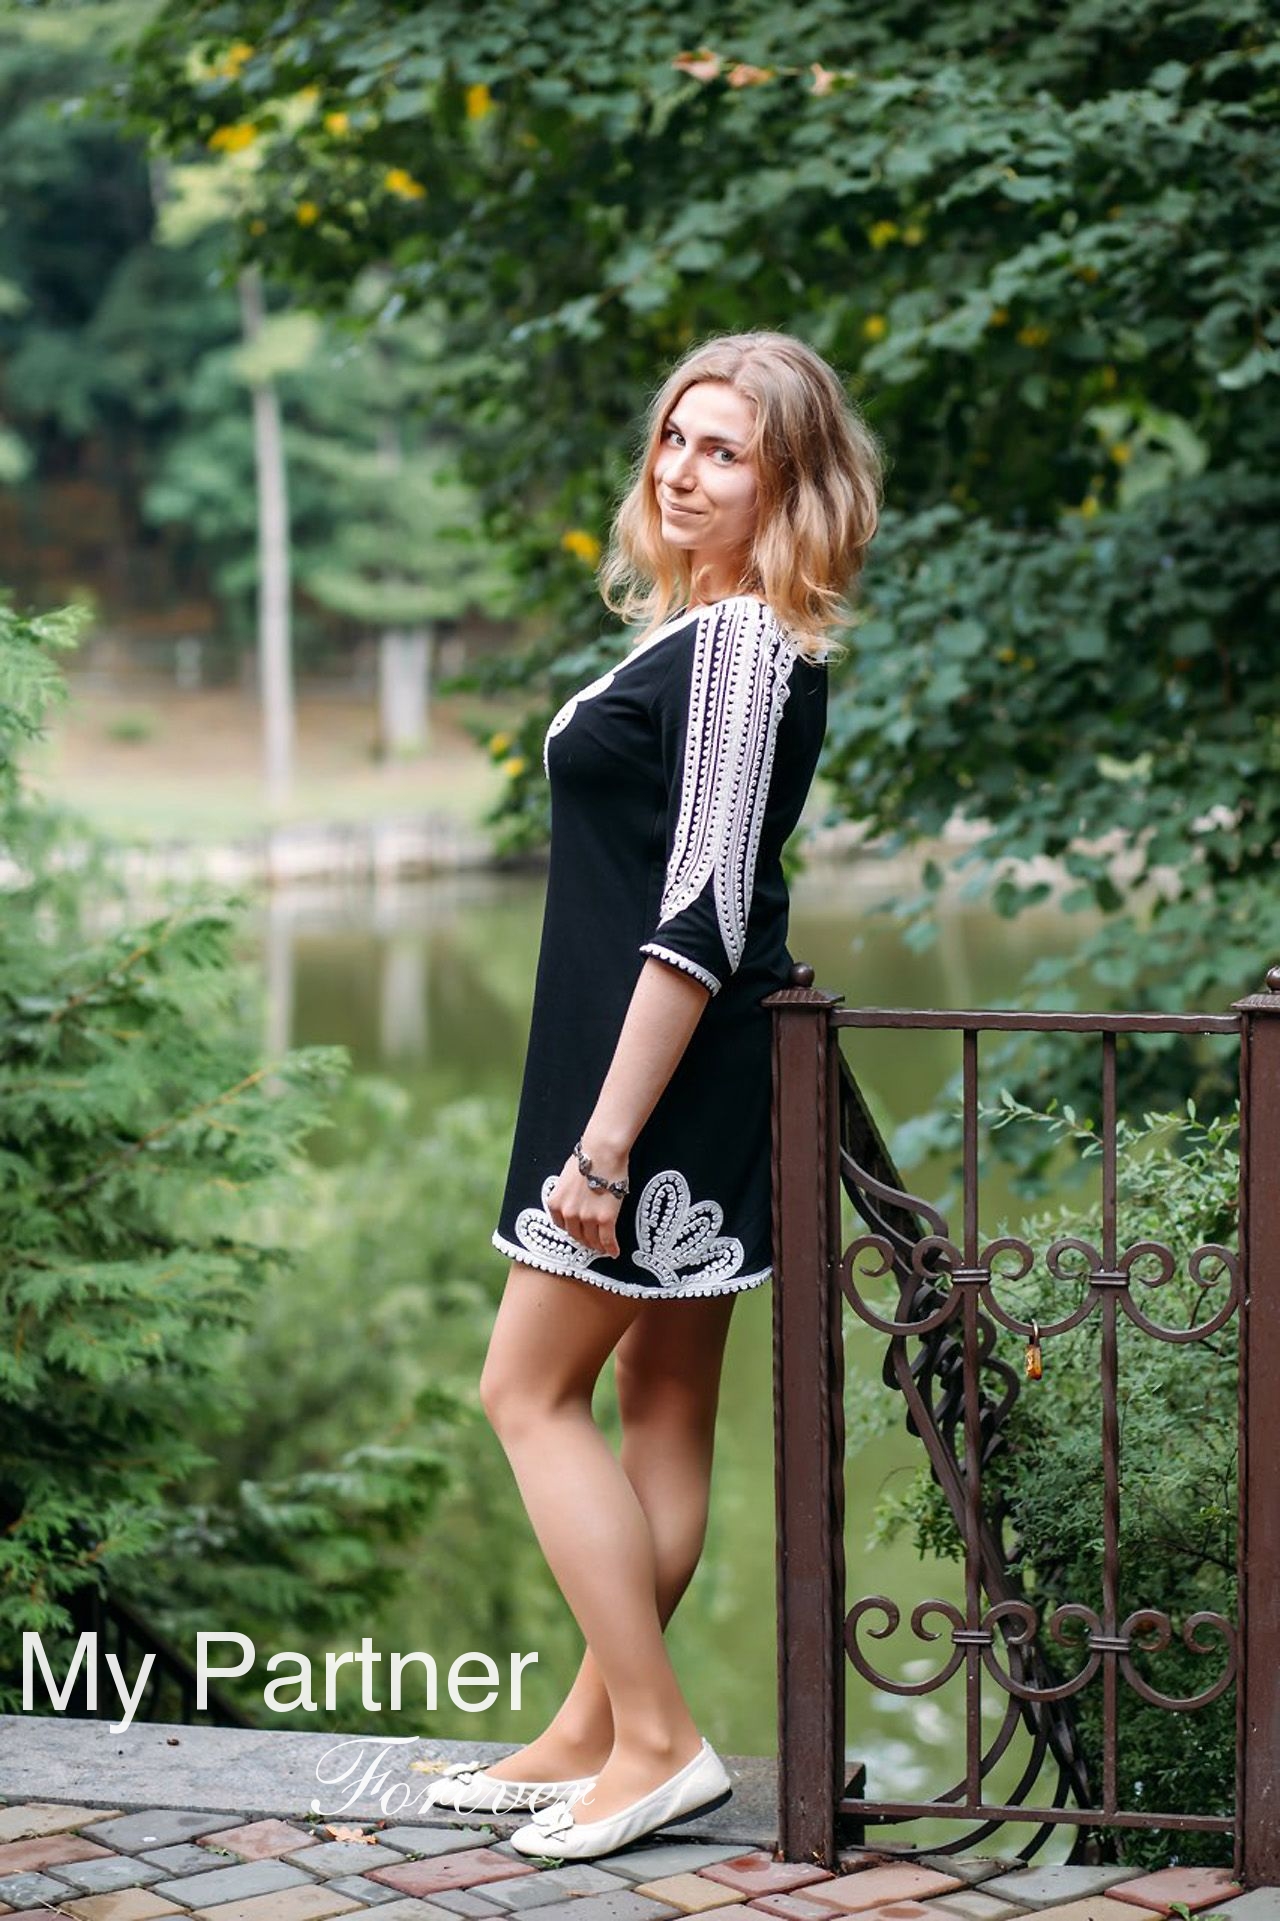 Dating Site to Meet Stunning Ukrainian Girl Margarita from Kharkov, Ukraine